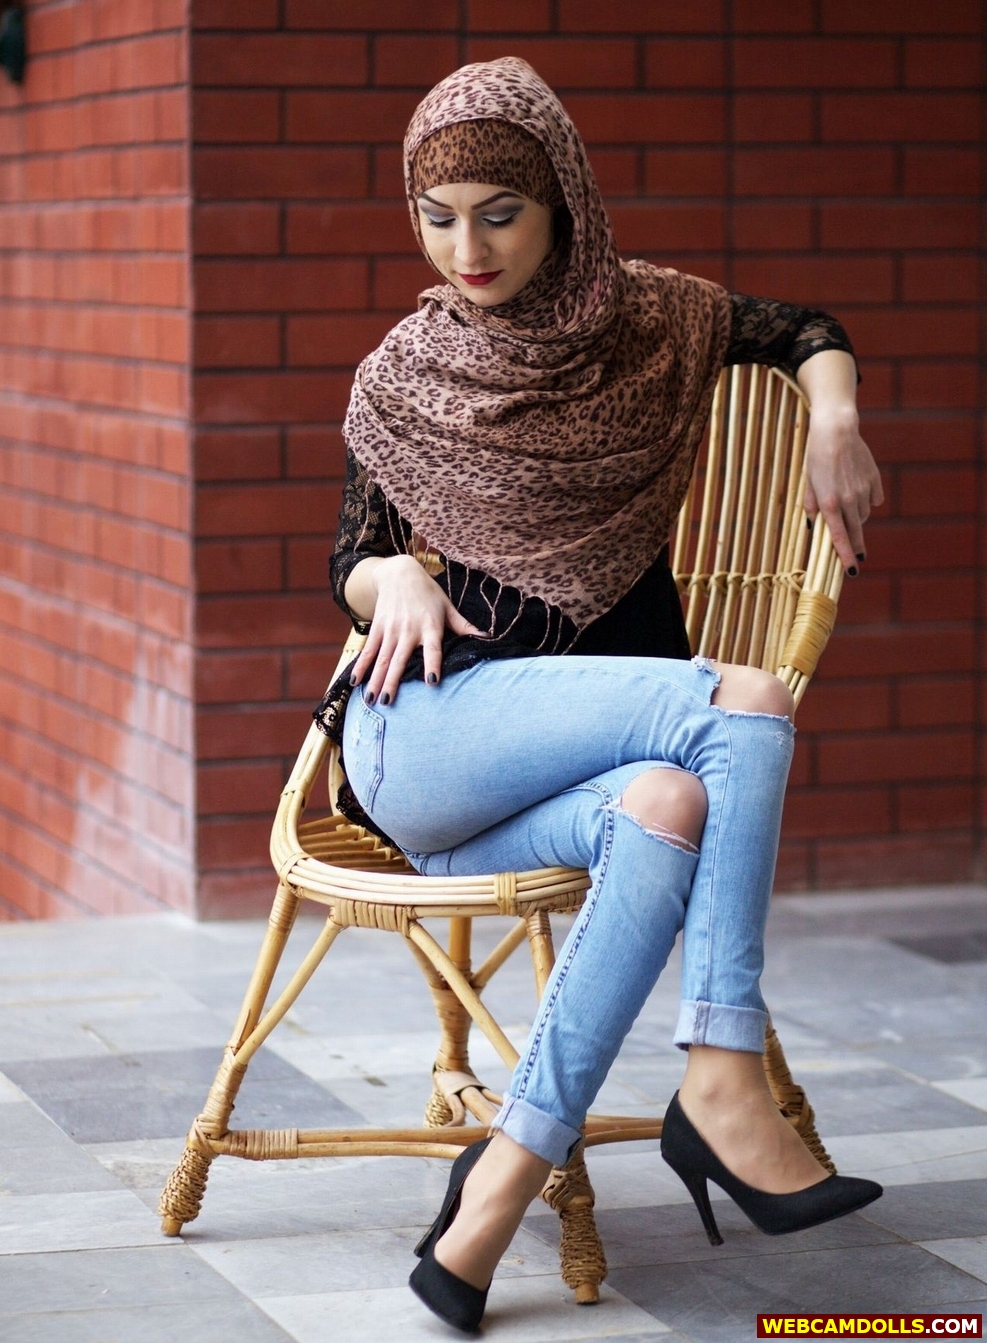 Arab Girl in Ripped Tight Blue Jean and Black Stilettos on Webcamdolls